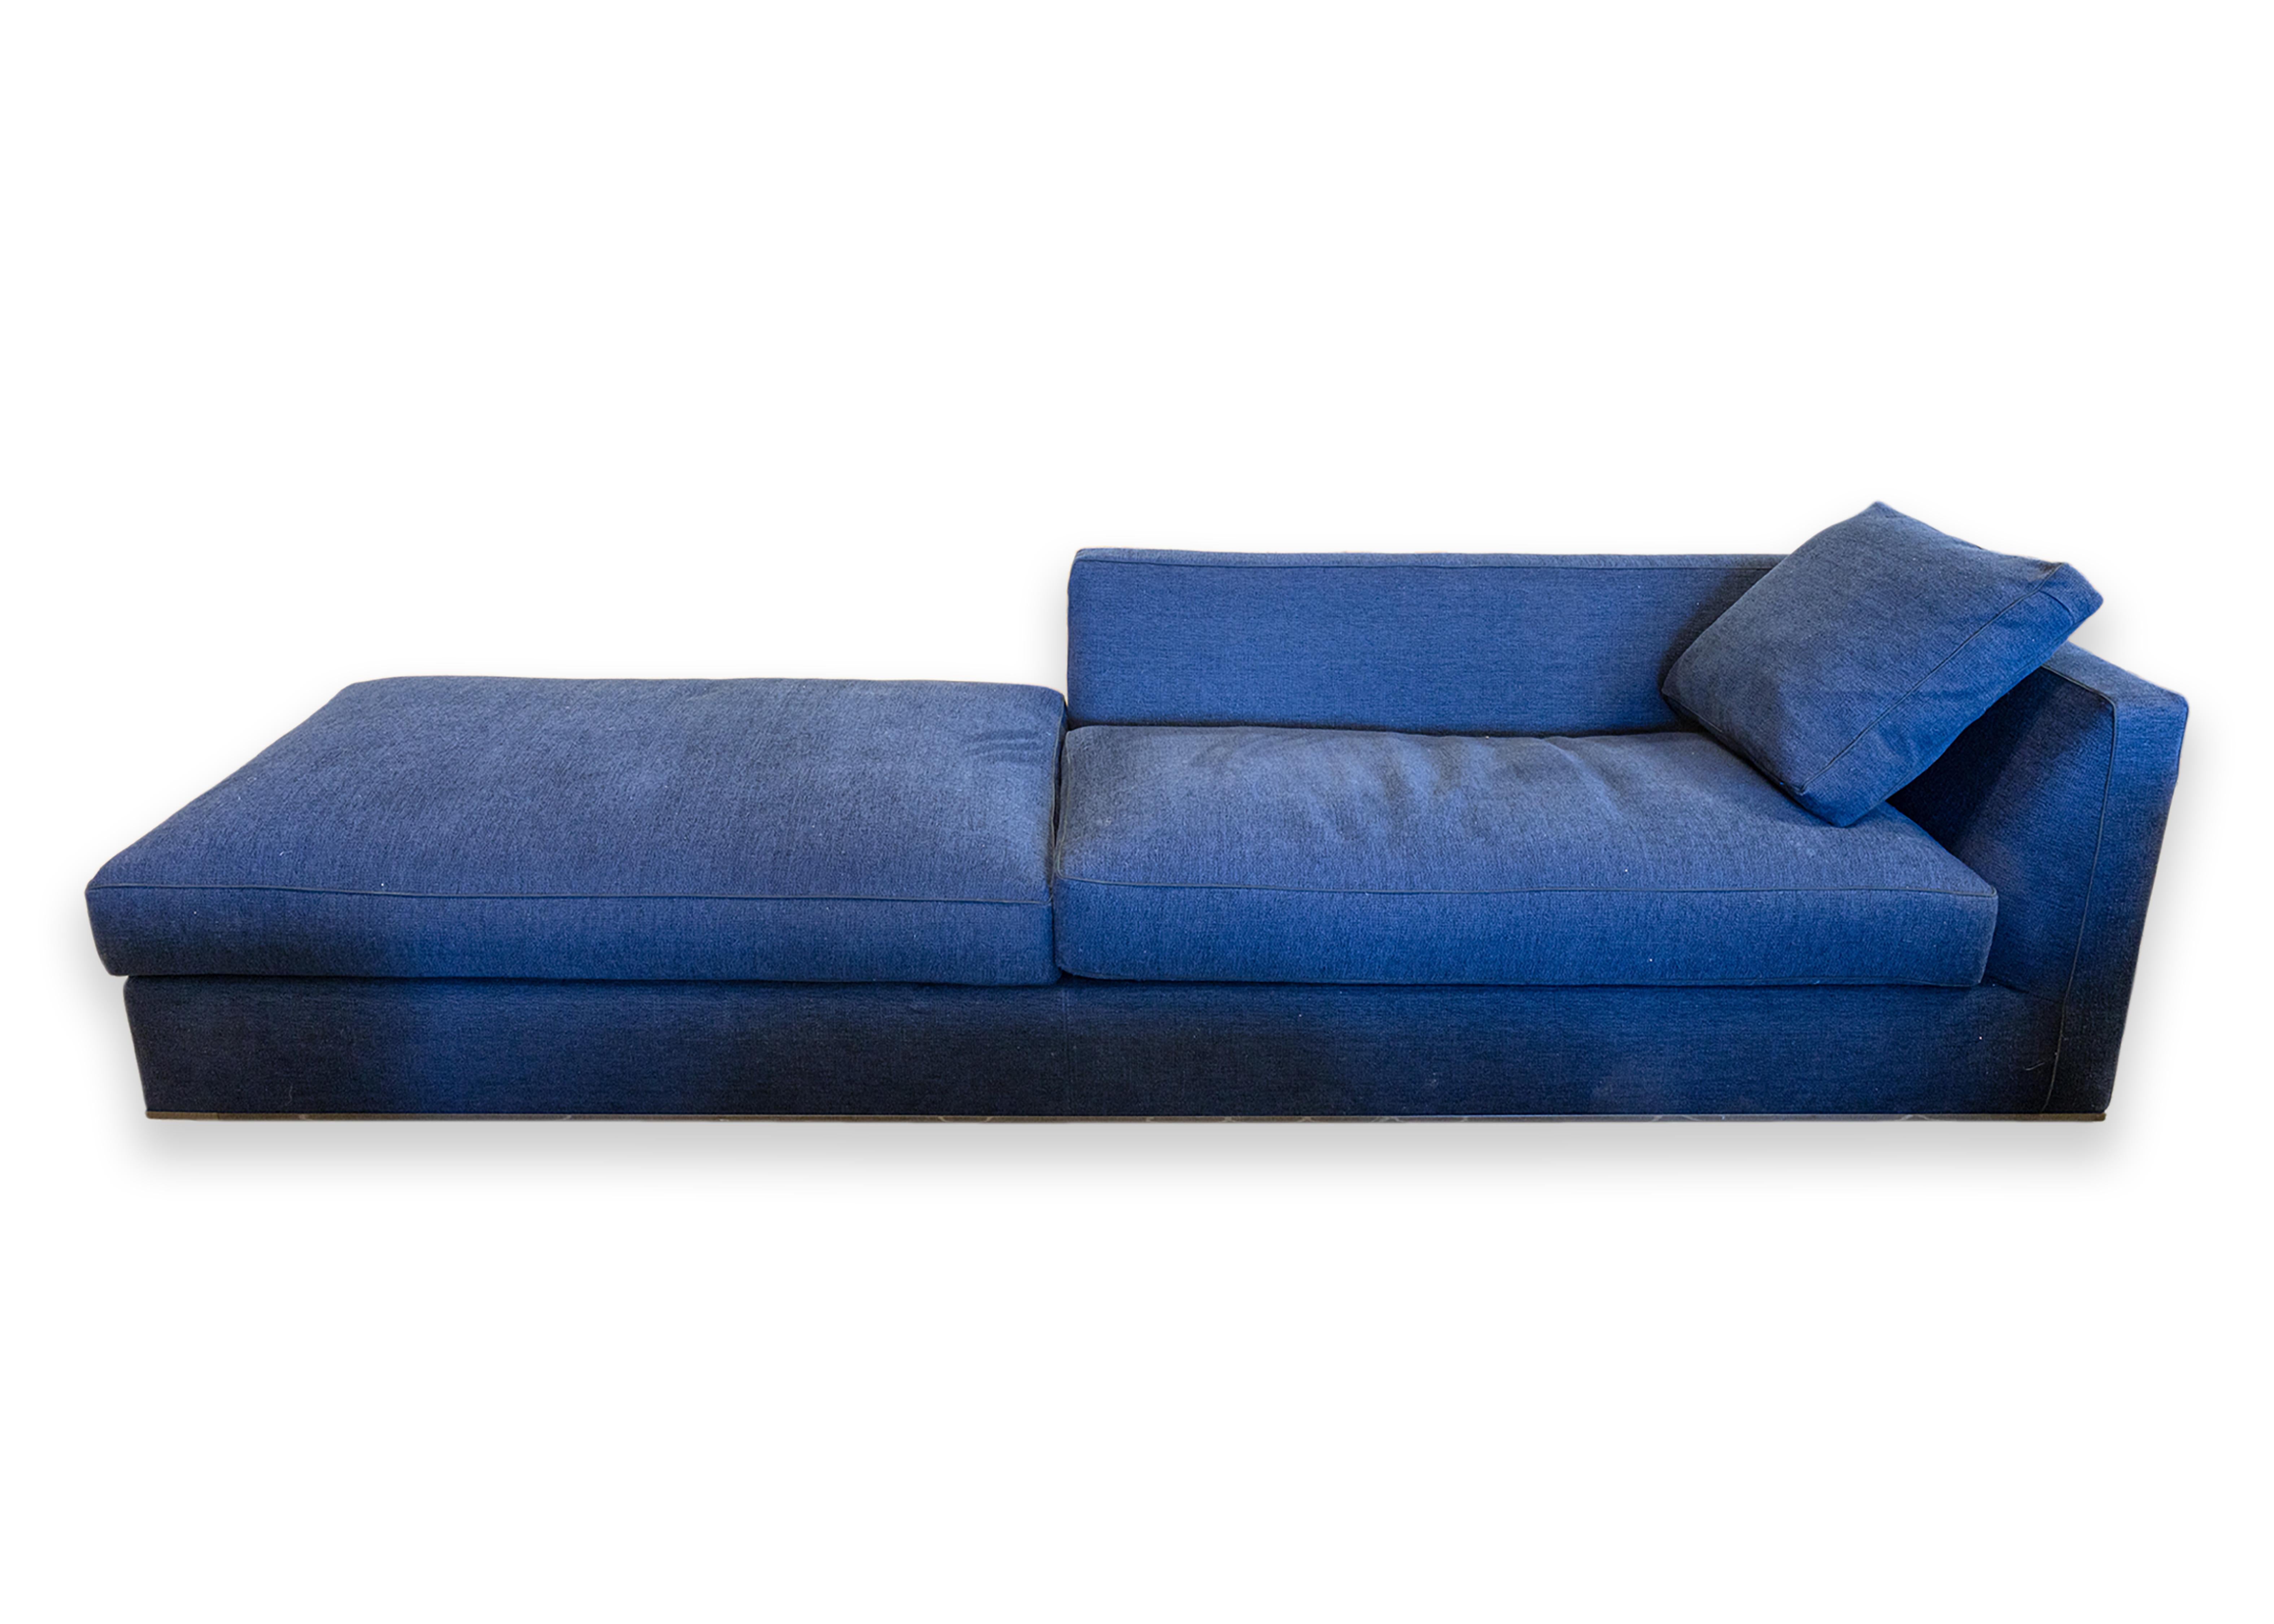 B & B Italia Antonio Citterio Richard Chaise Lounge Sofa in Blau mit S-Stoff-Stoff in Blau im Angebot 3